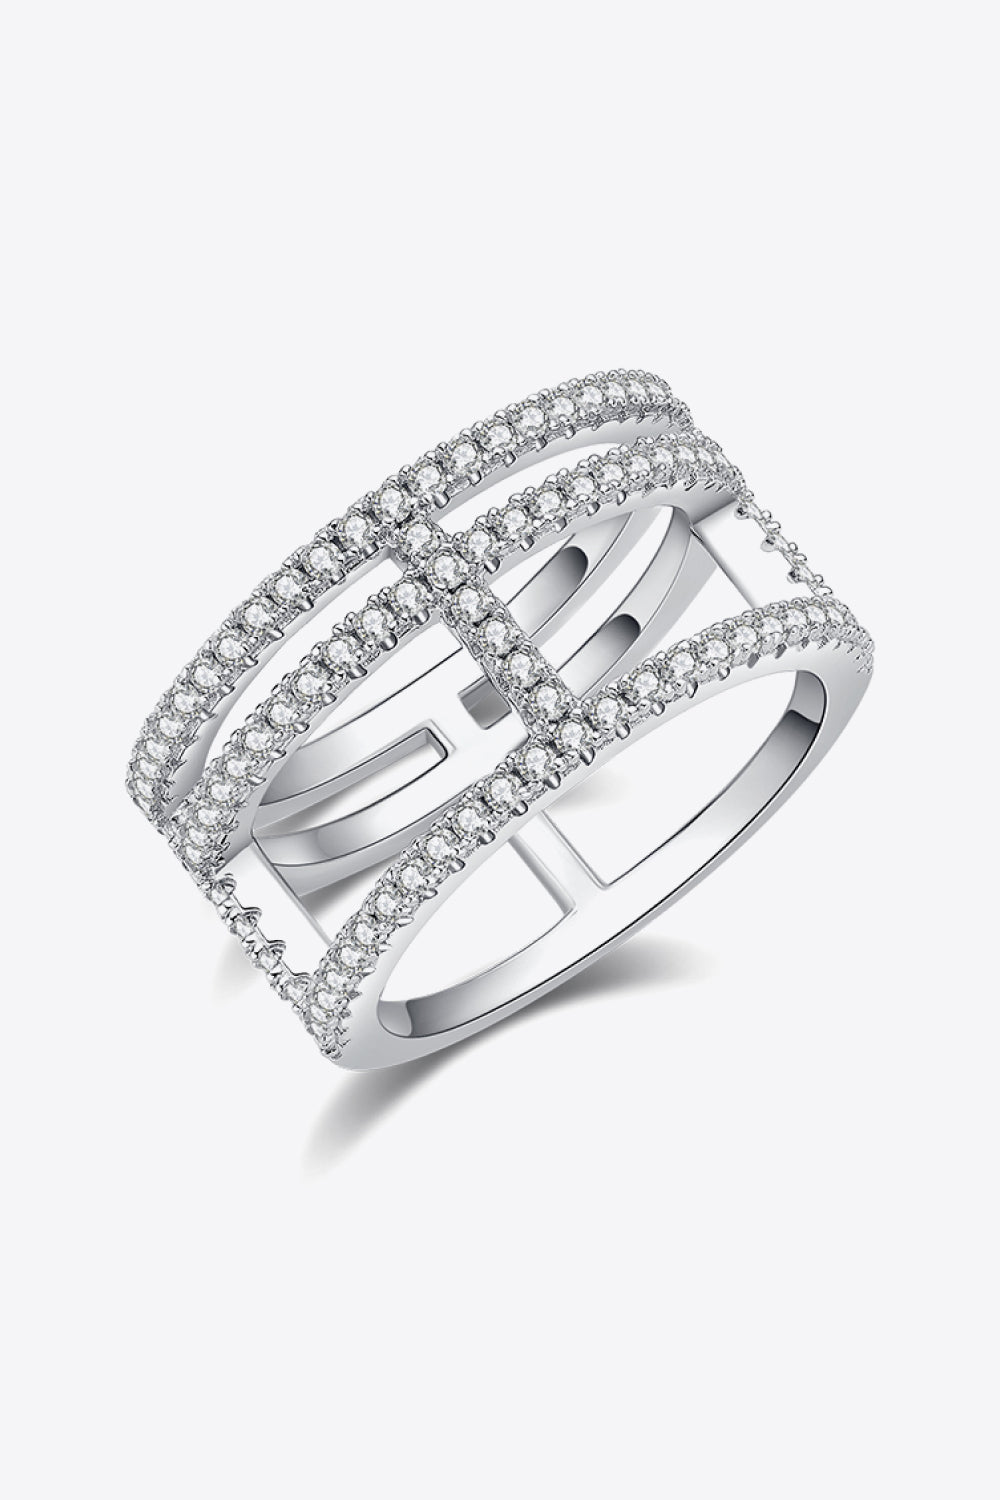 Starlight Whisper Ring by Metopia Designs